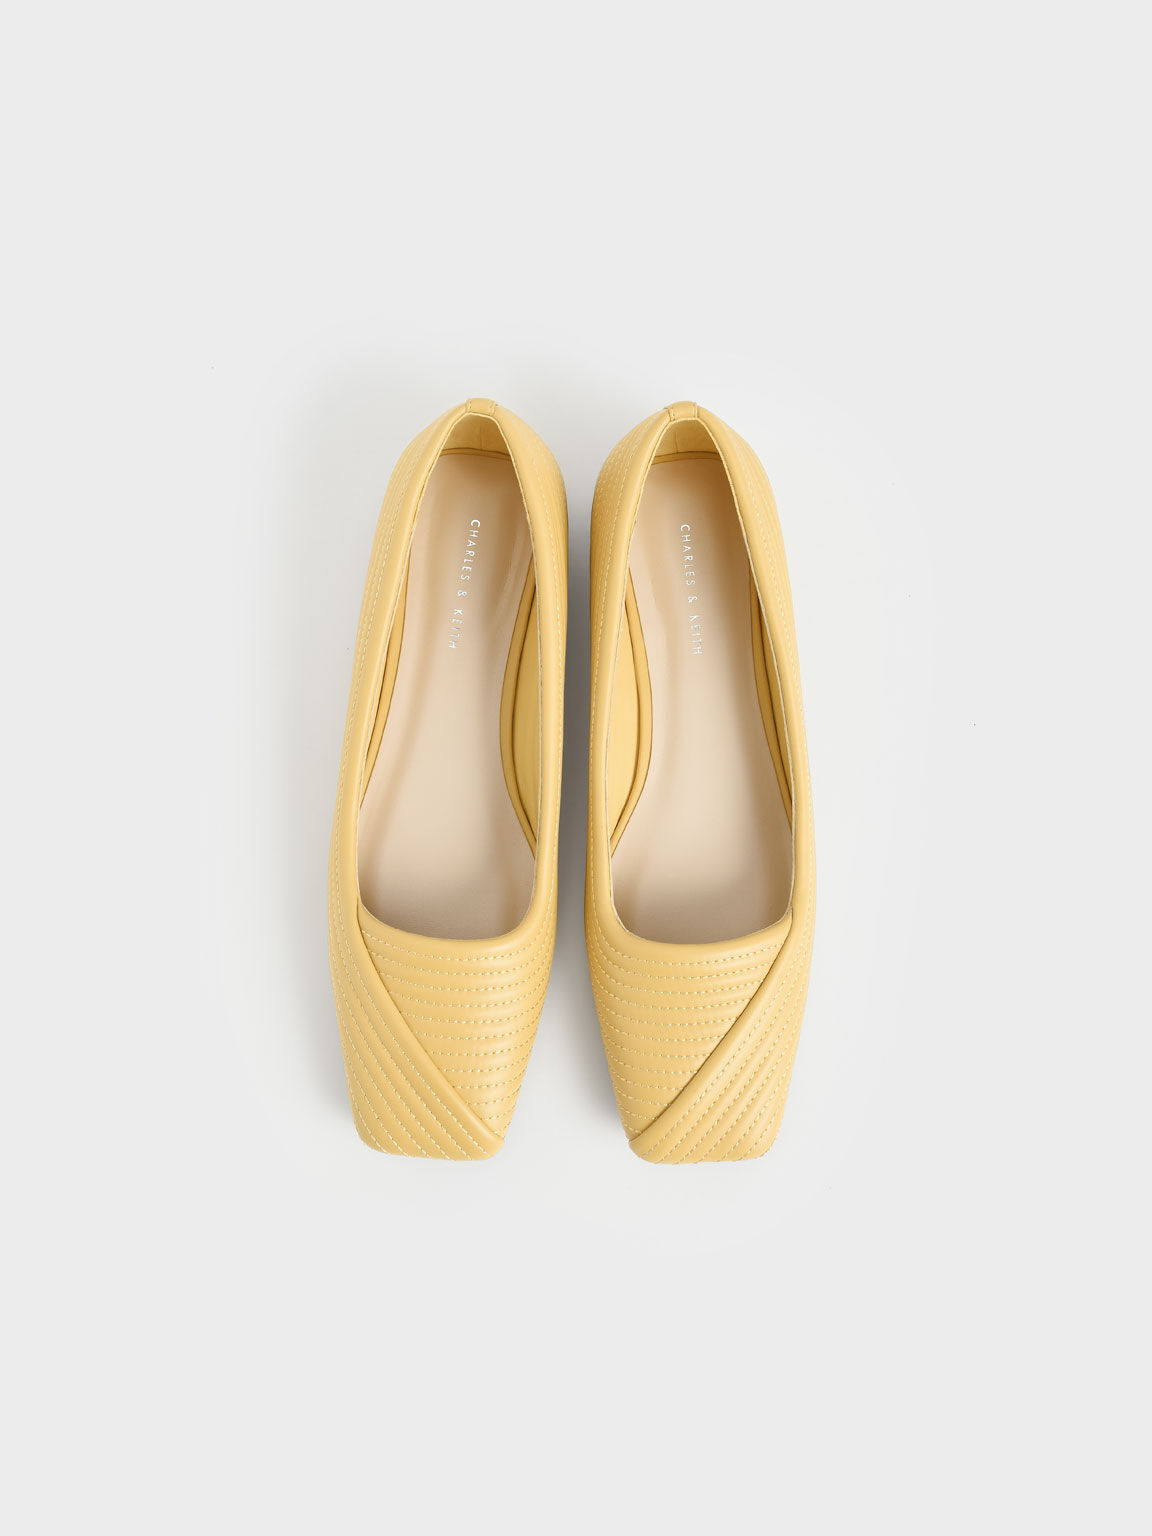 Stitch-Trim Square Toe Ballerina Flats, Yellow, hi-res